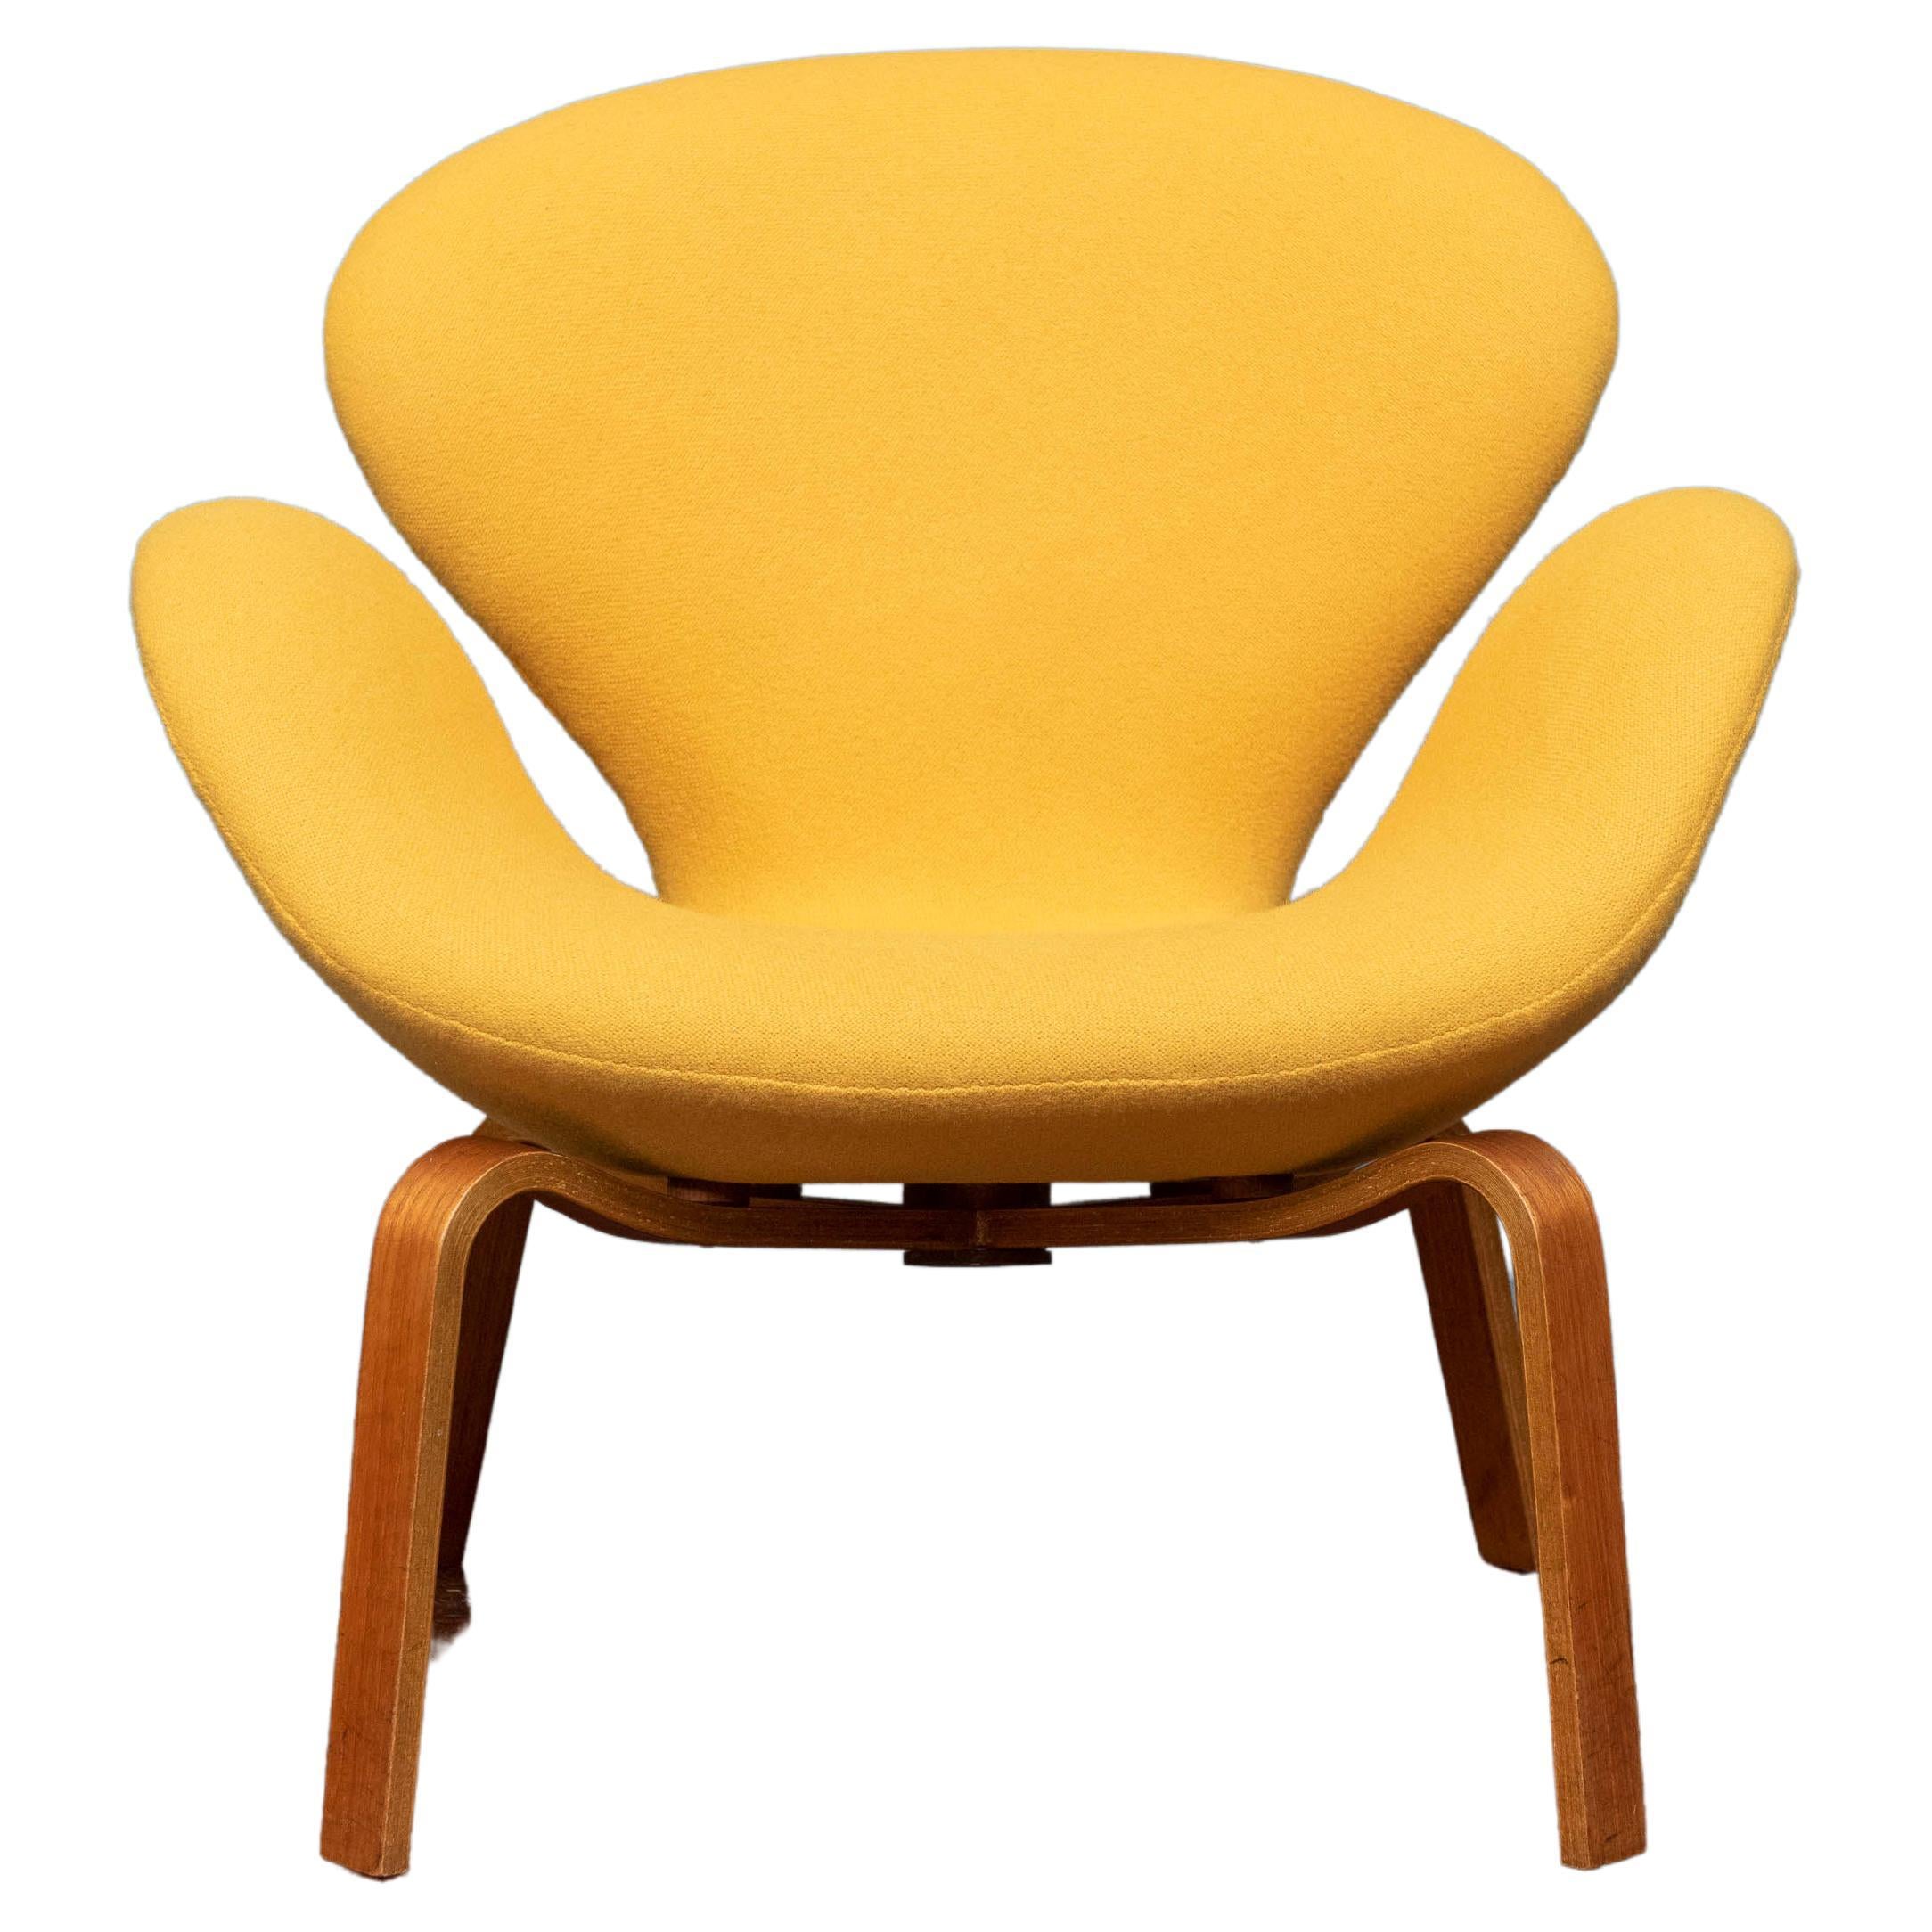 Swan Chair with Laminated Wooden Base, Arne Jacobsen for Fritz Hansen, 1958